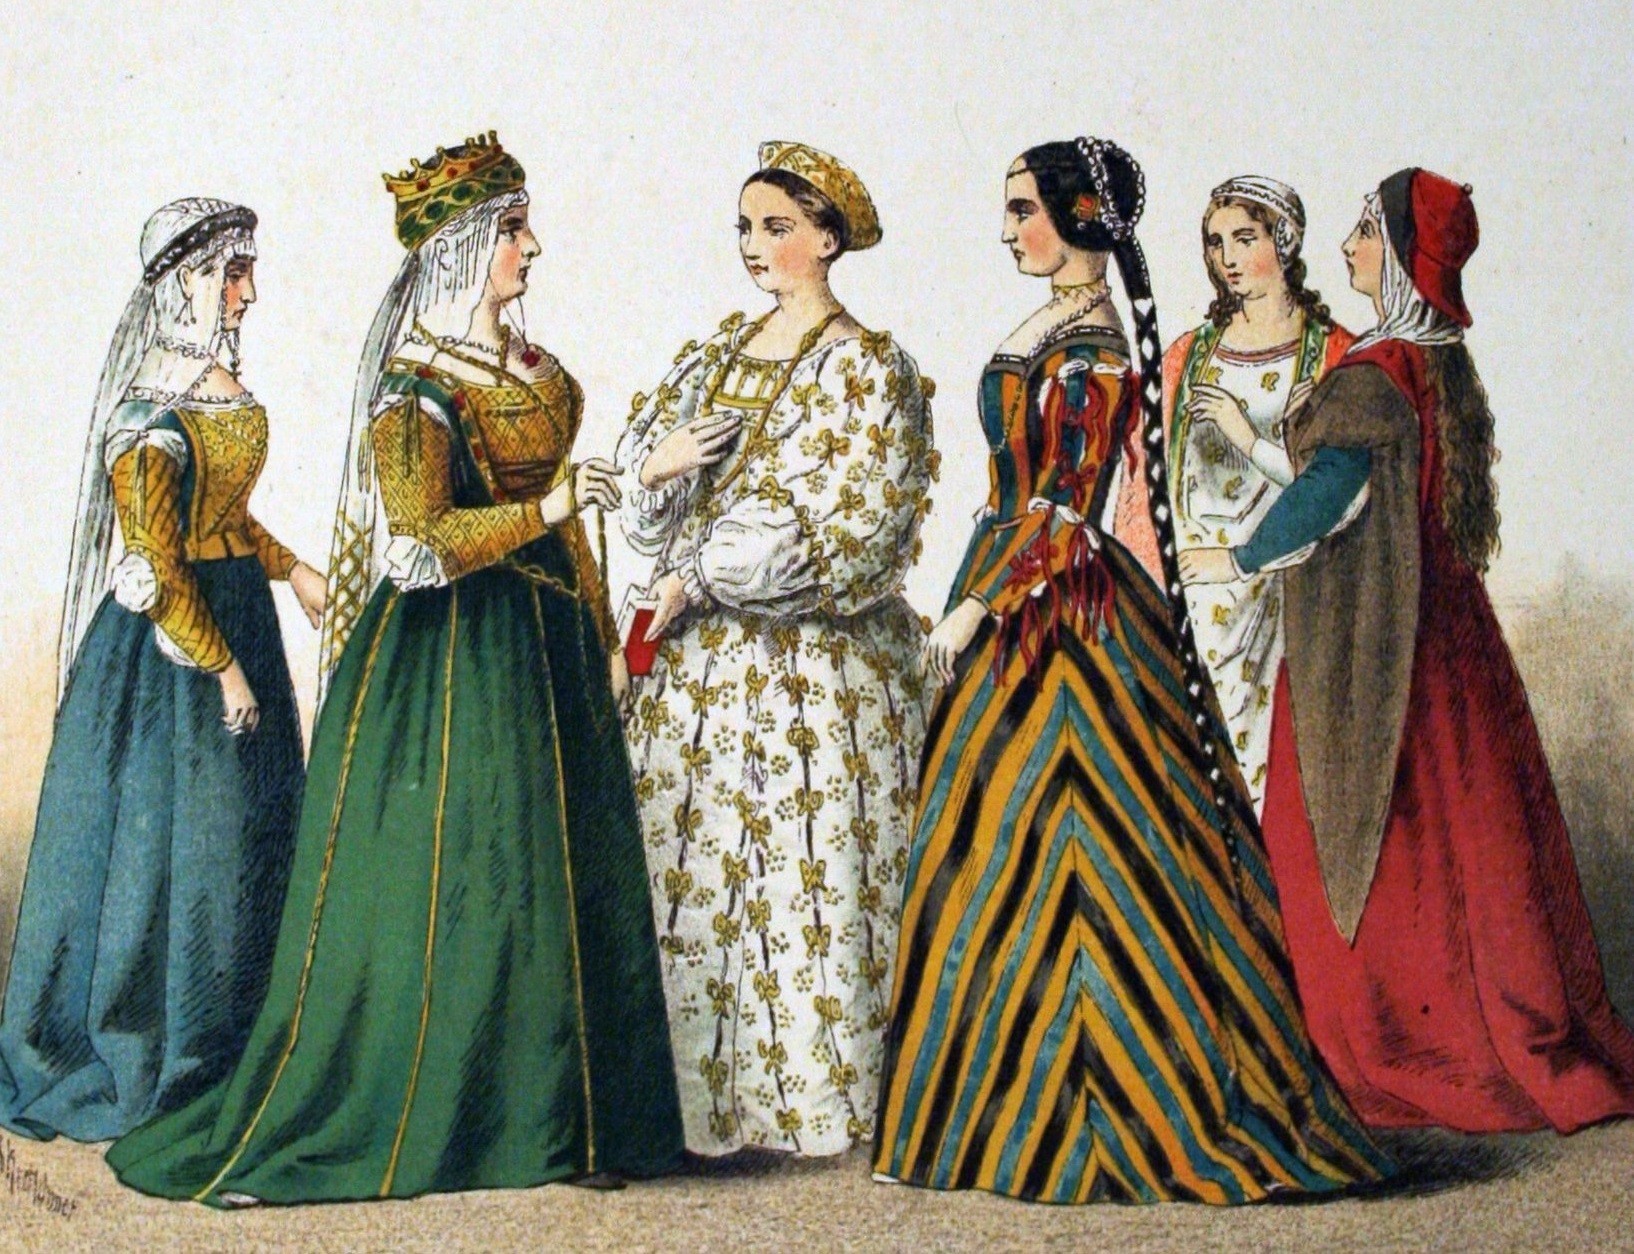 15 Век мода в Европе. Мода 15 века в Европе. Мода средневековья 15 век. Бургундская мода и Франция 15 века.